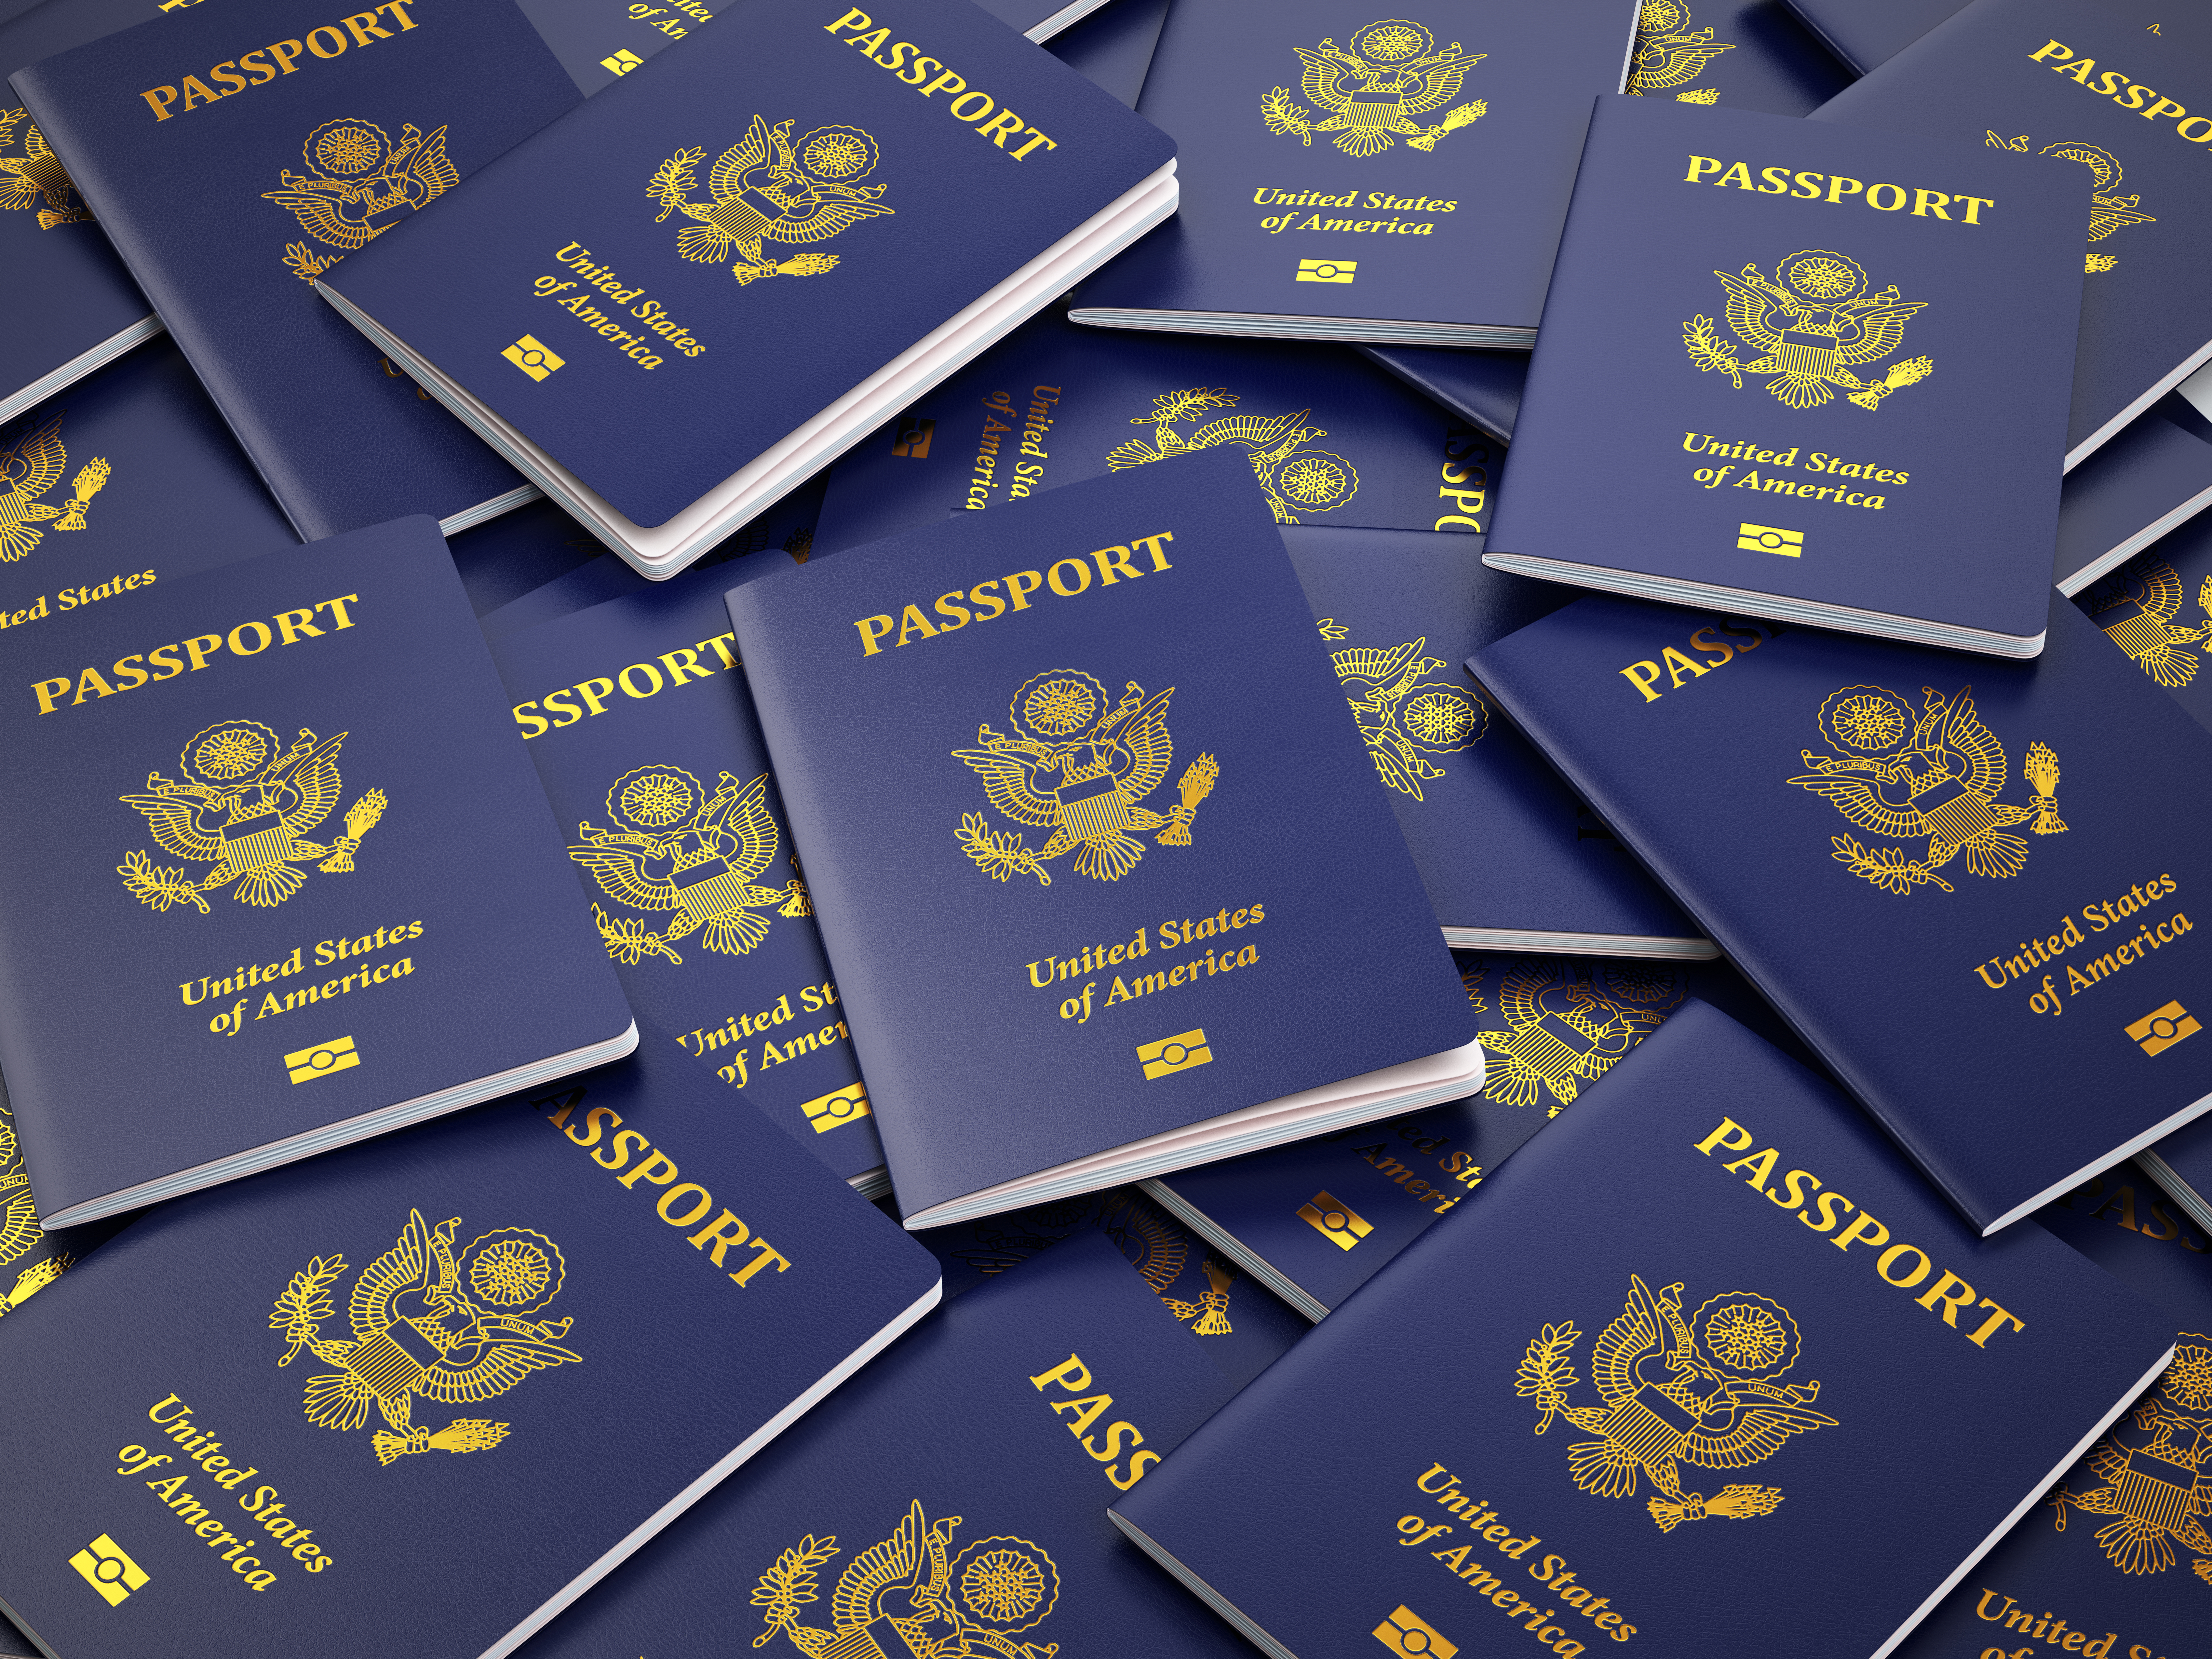 9 Hechos de pasaporte sorprendentes que necesita saber | Esta web - 45